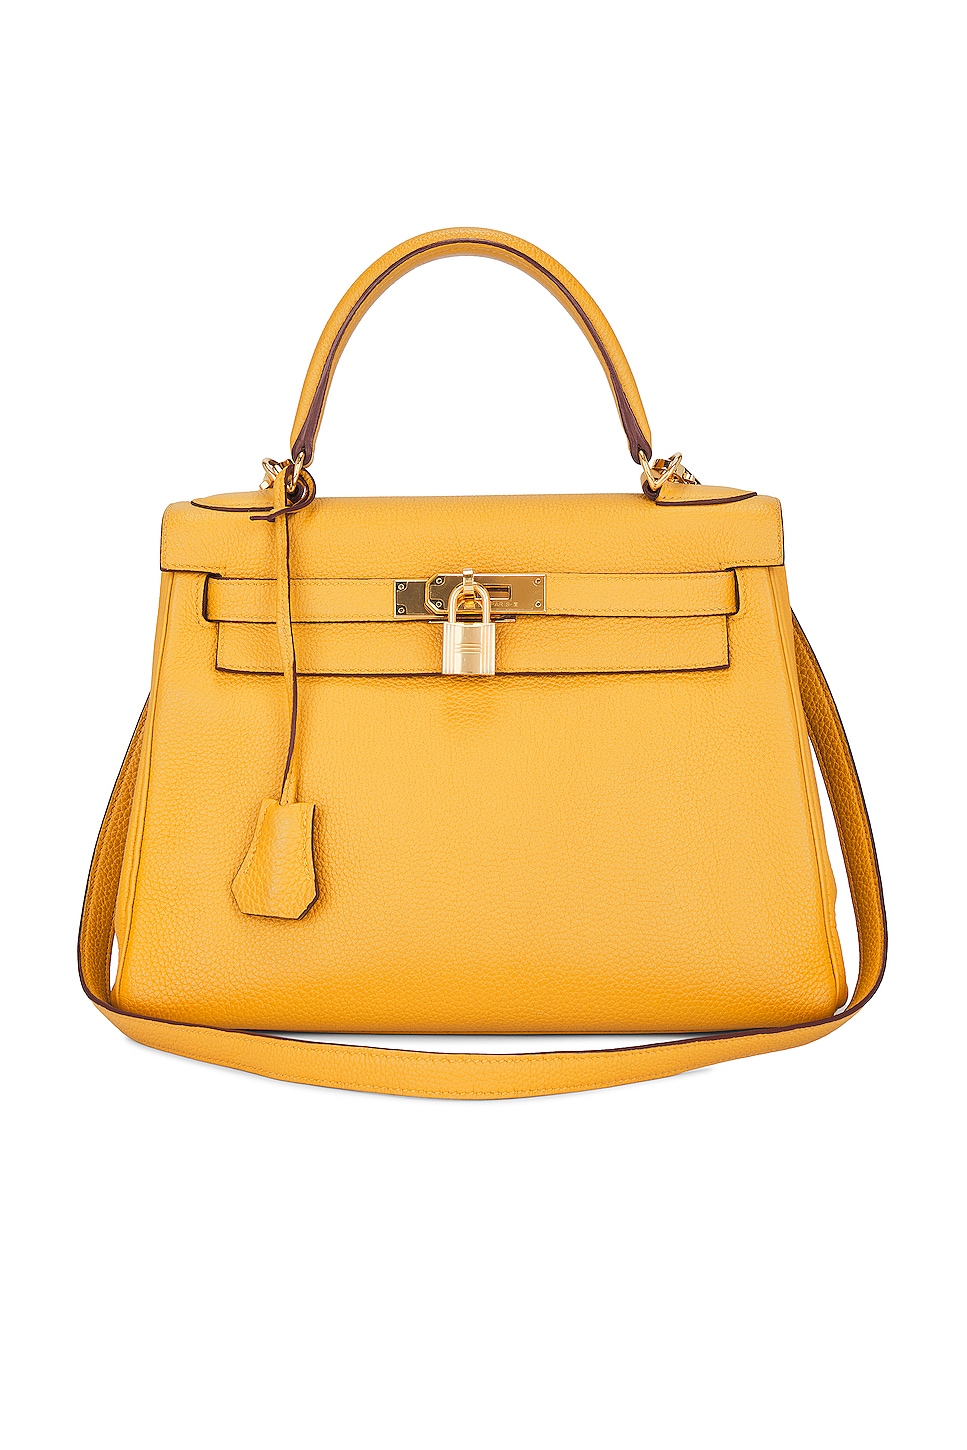 Hermès Jaune Ambre Retourne Kelly 32cm of Togo Leather with Gold Hardware, Handbags & Accessories Online, Ecommerce Retail